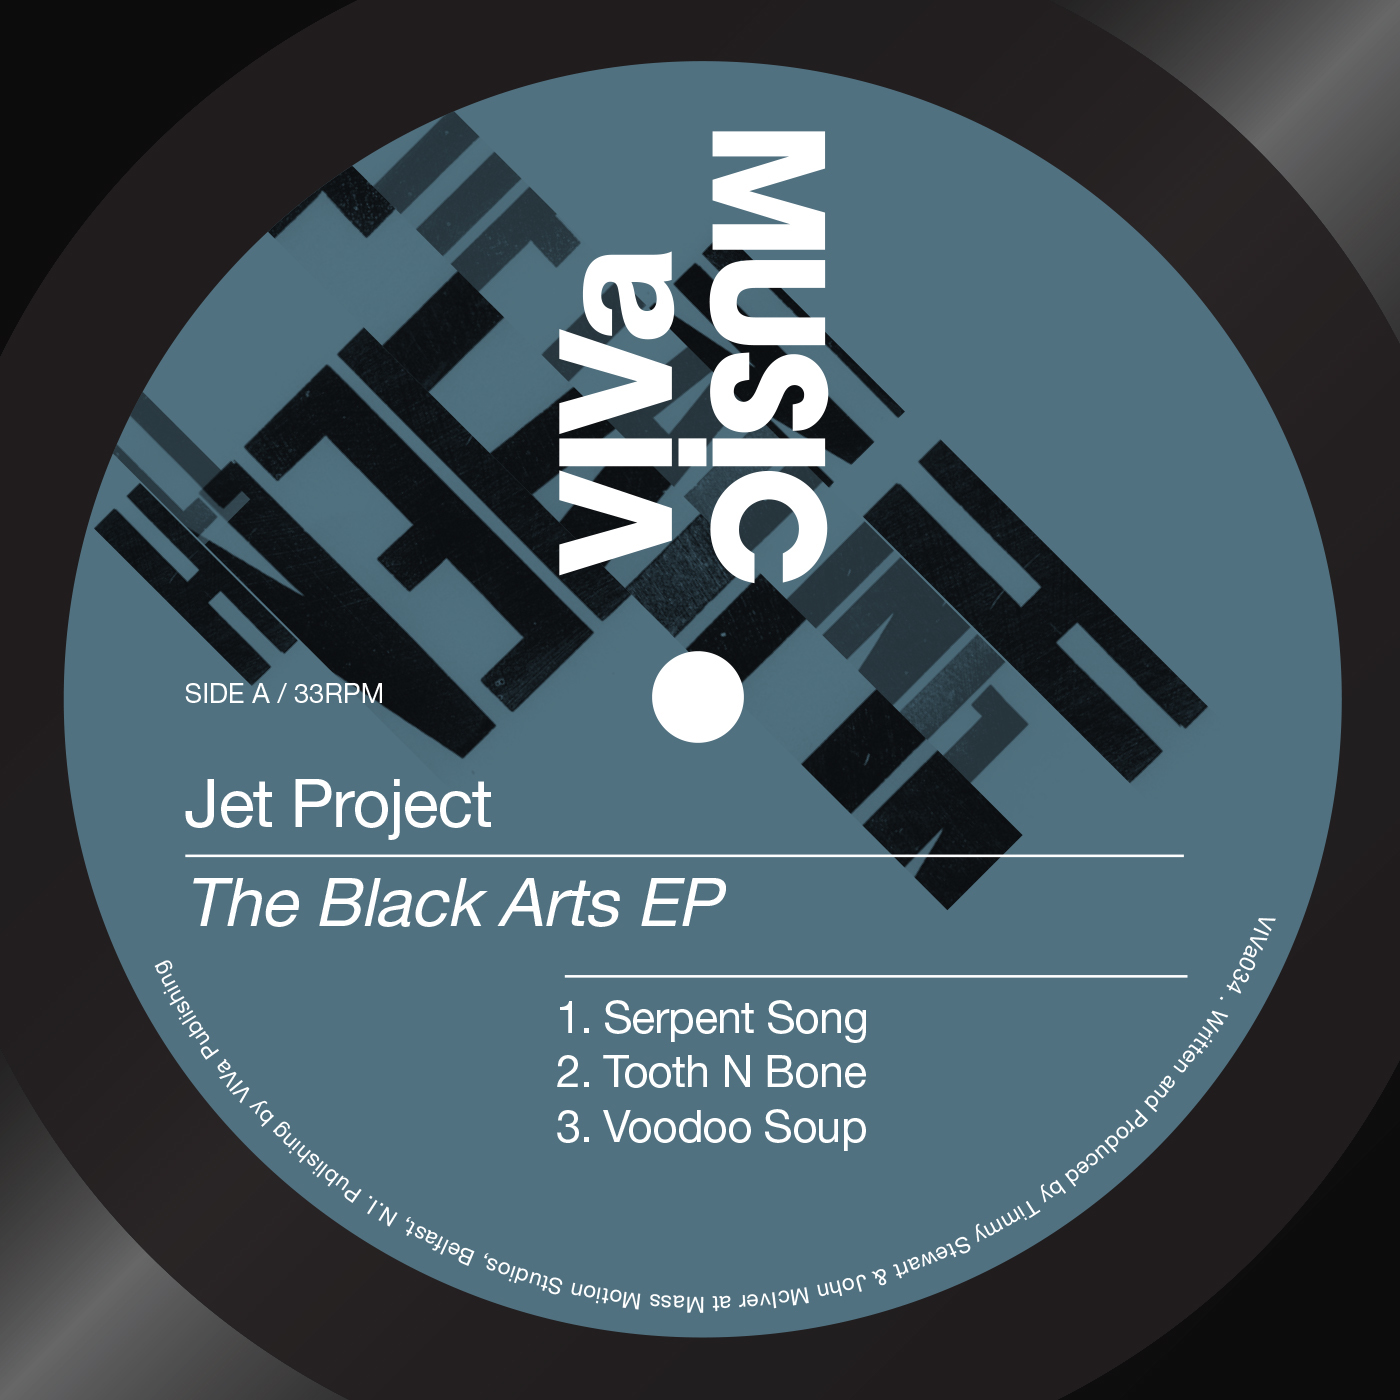 The Black Arts EP